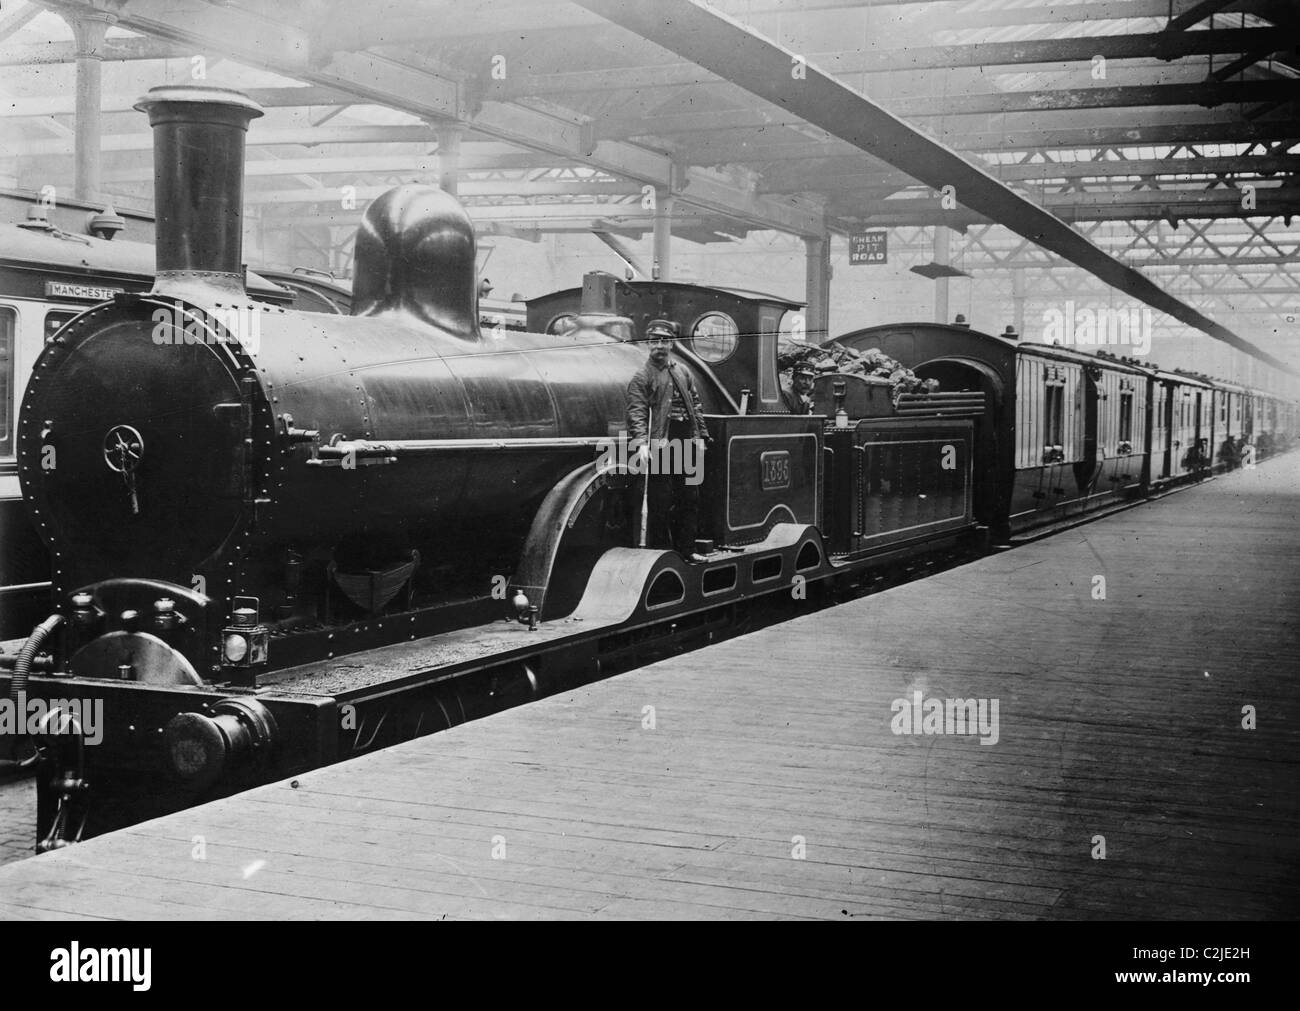 Great britain steam фото 54